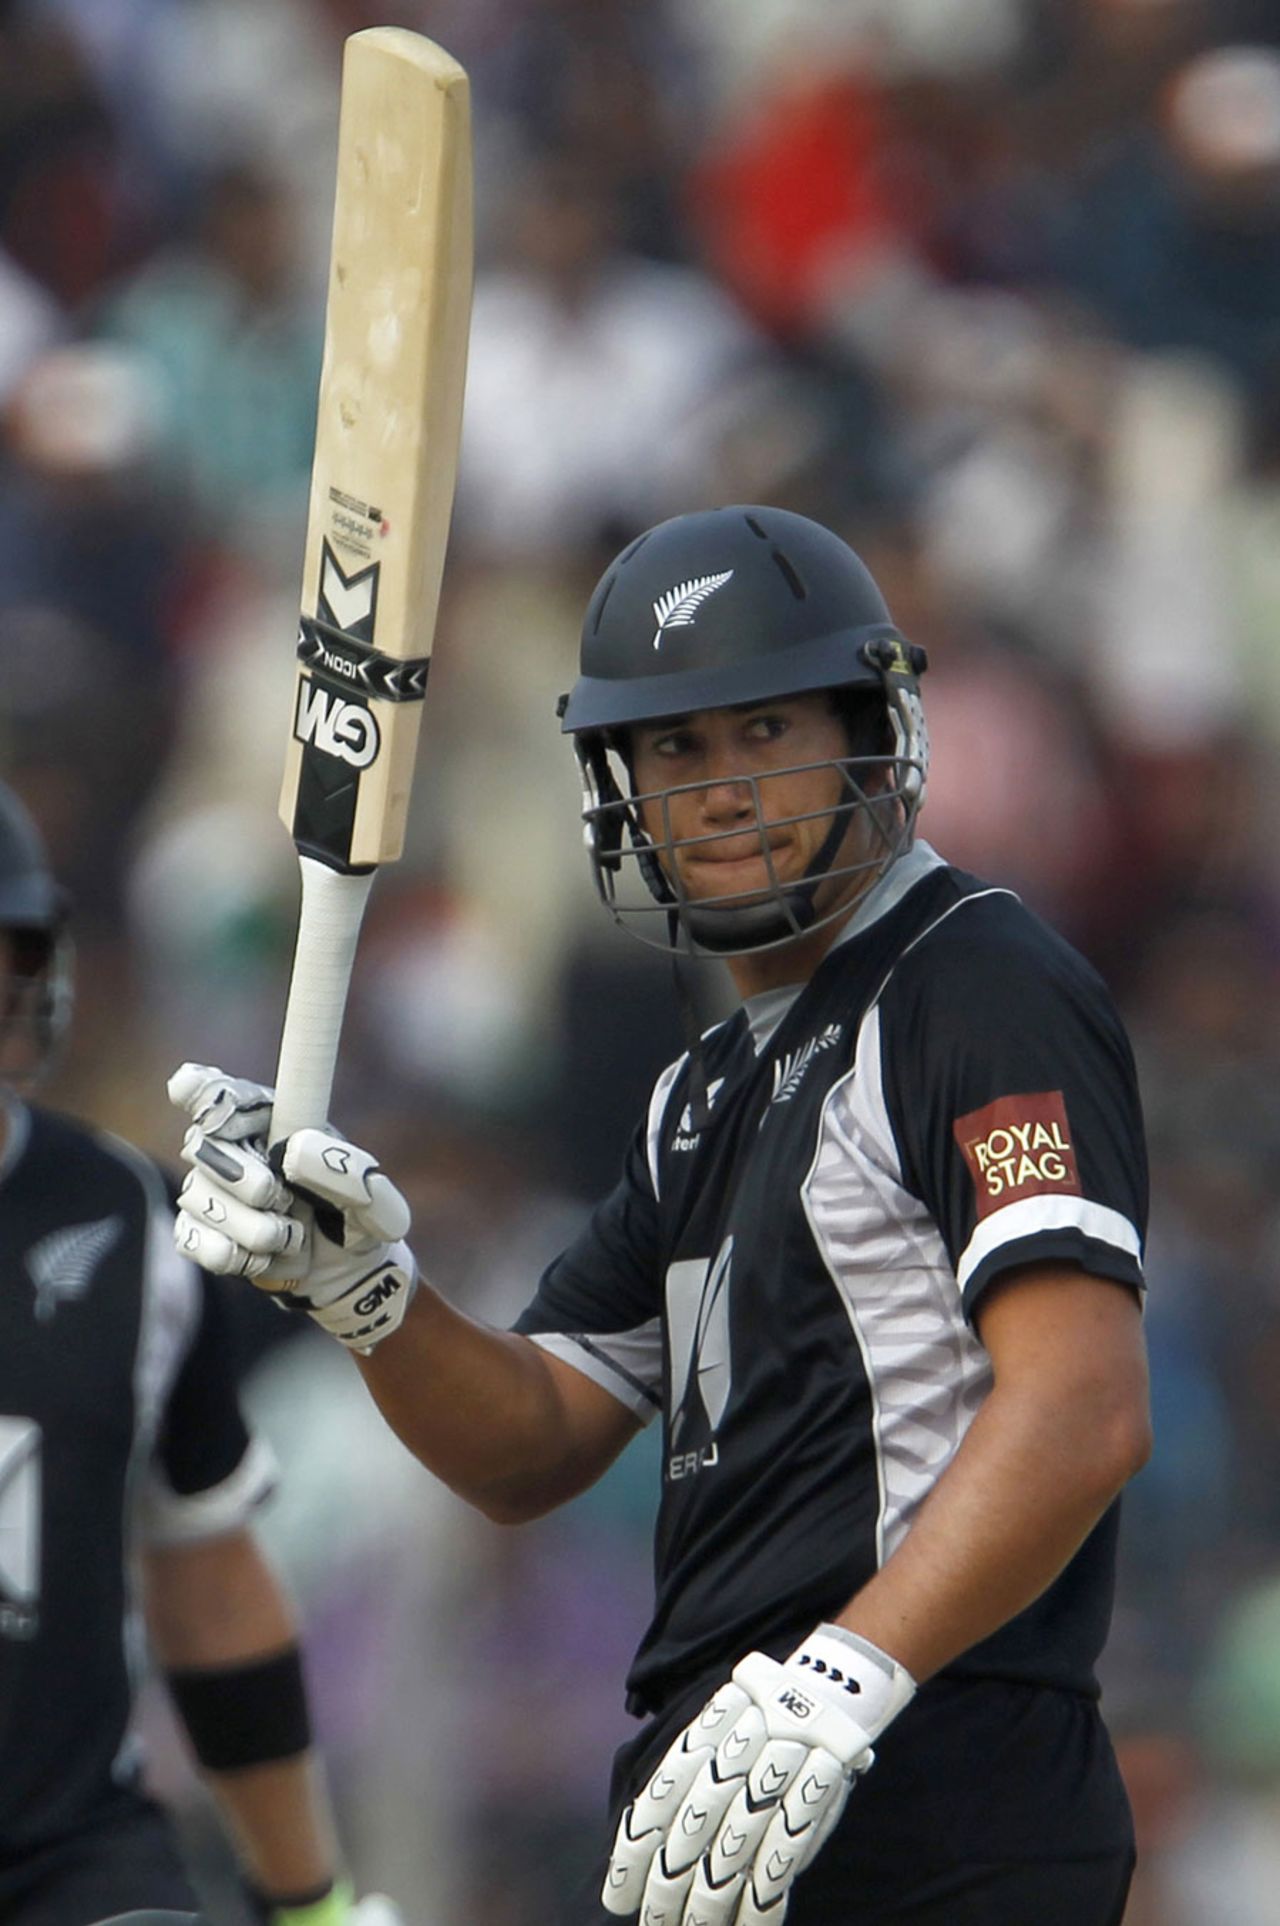 Ross Taylor raises his bat on getting to his half-century, India v New Zealand, 1st ODI, Guwahati, November 28, 2010